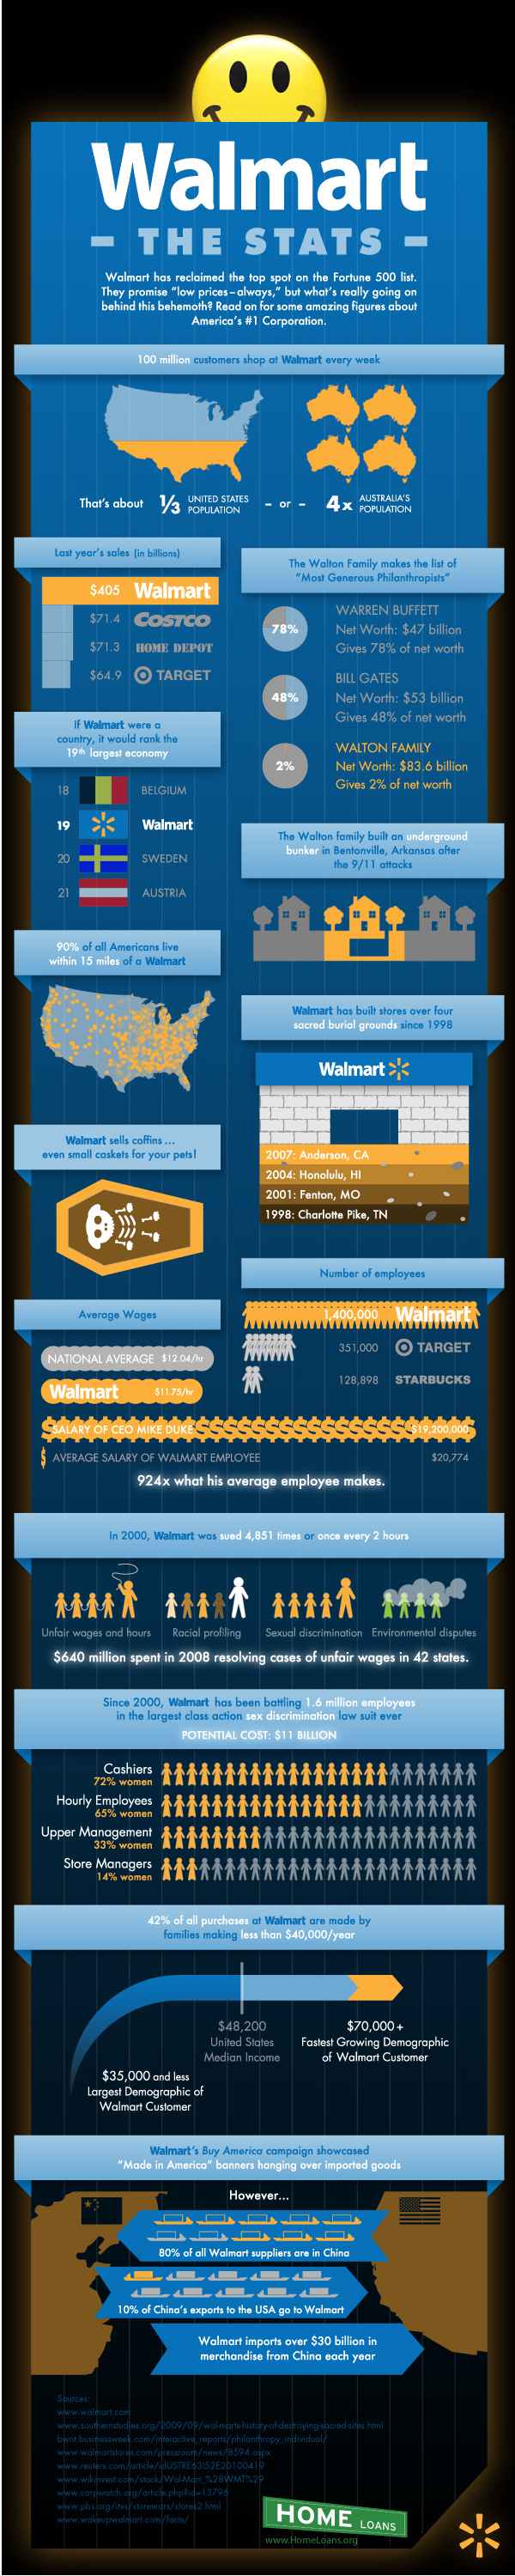 Walmart: The Stats